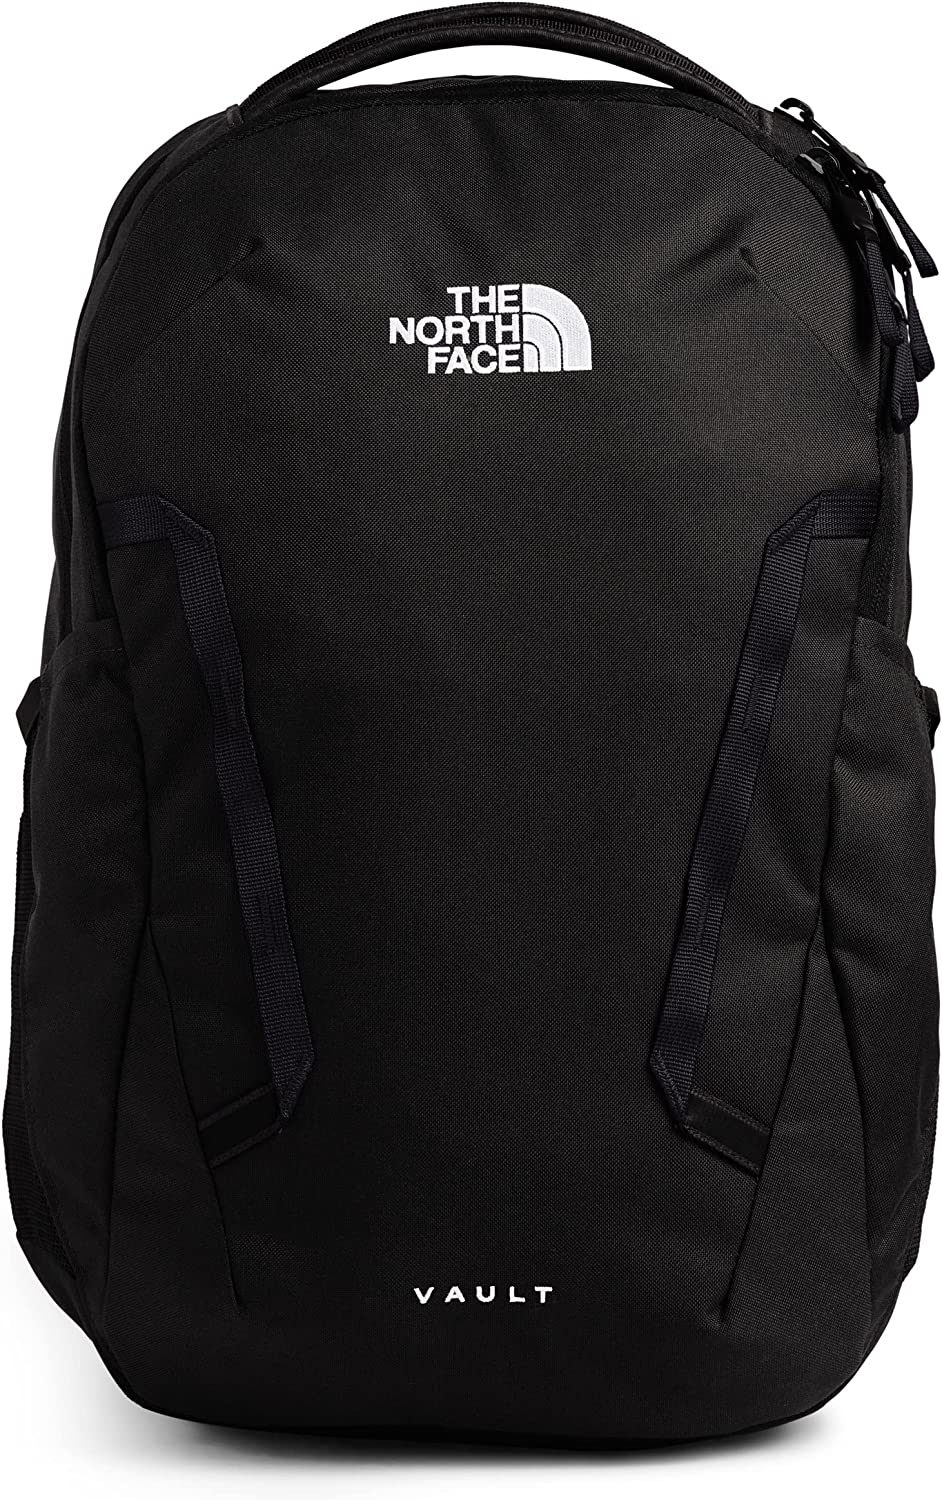 Best North Face Backpacks – Top 8 Picks